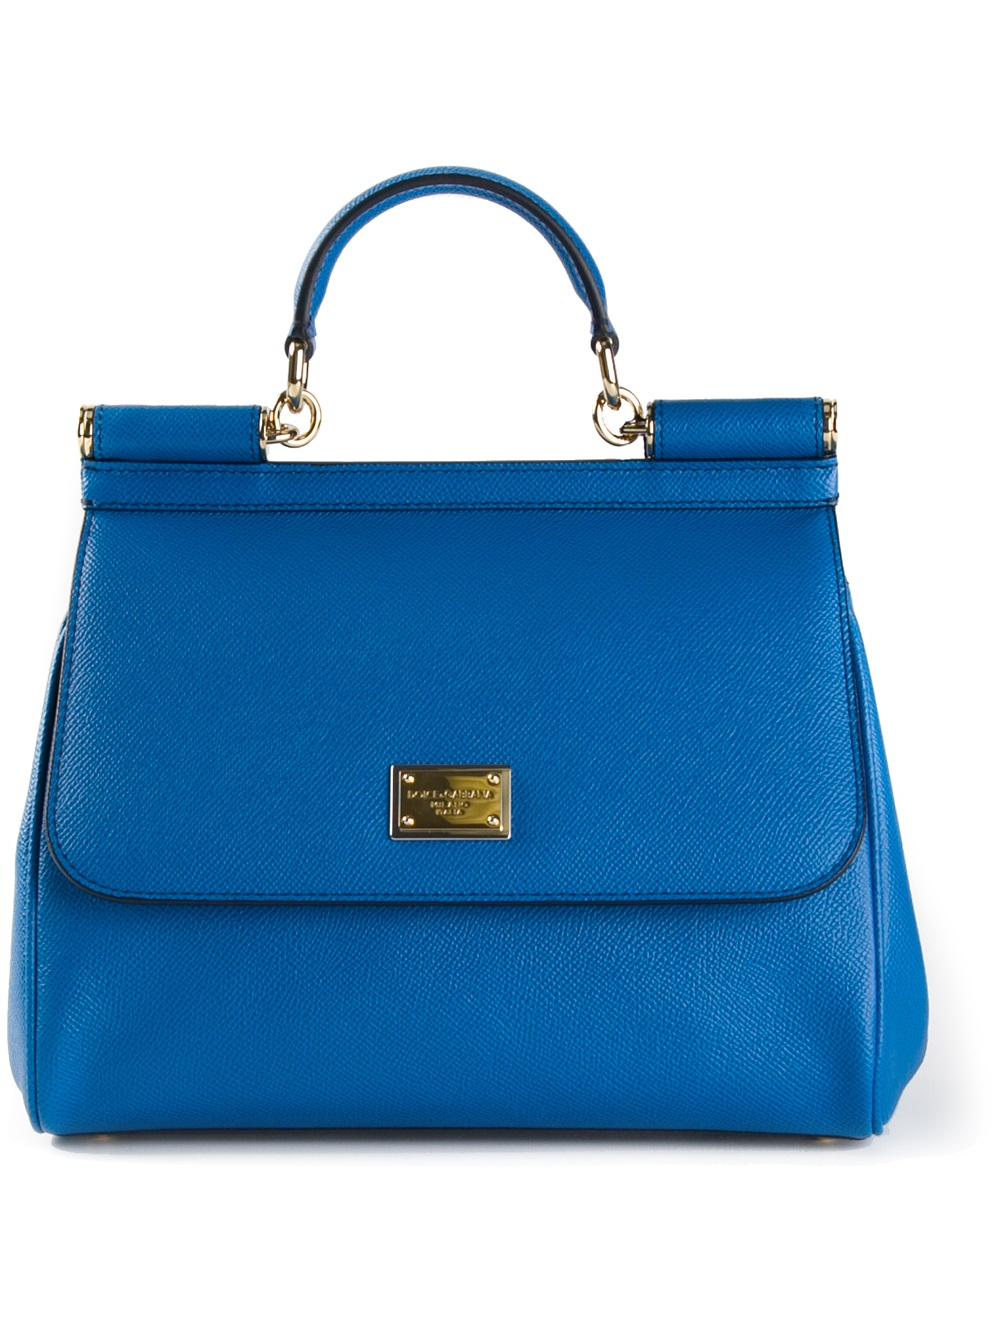 Lyst - Dolce & Gabbana Miss Sicily Bag in Blue